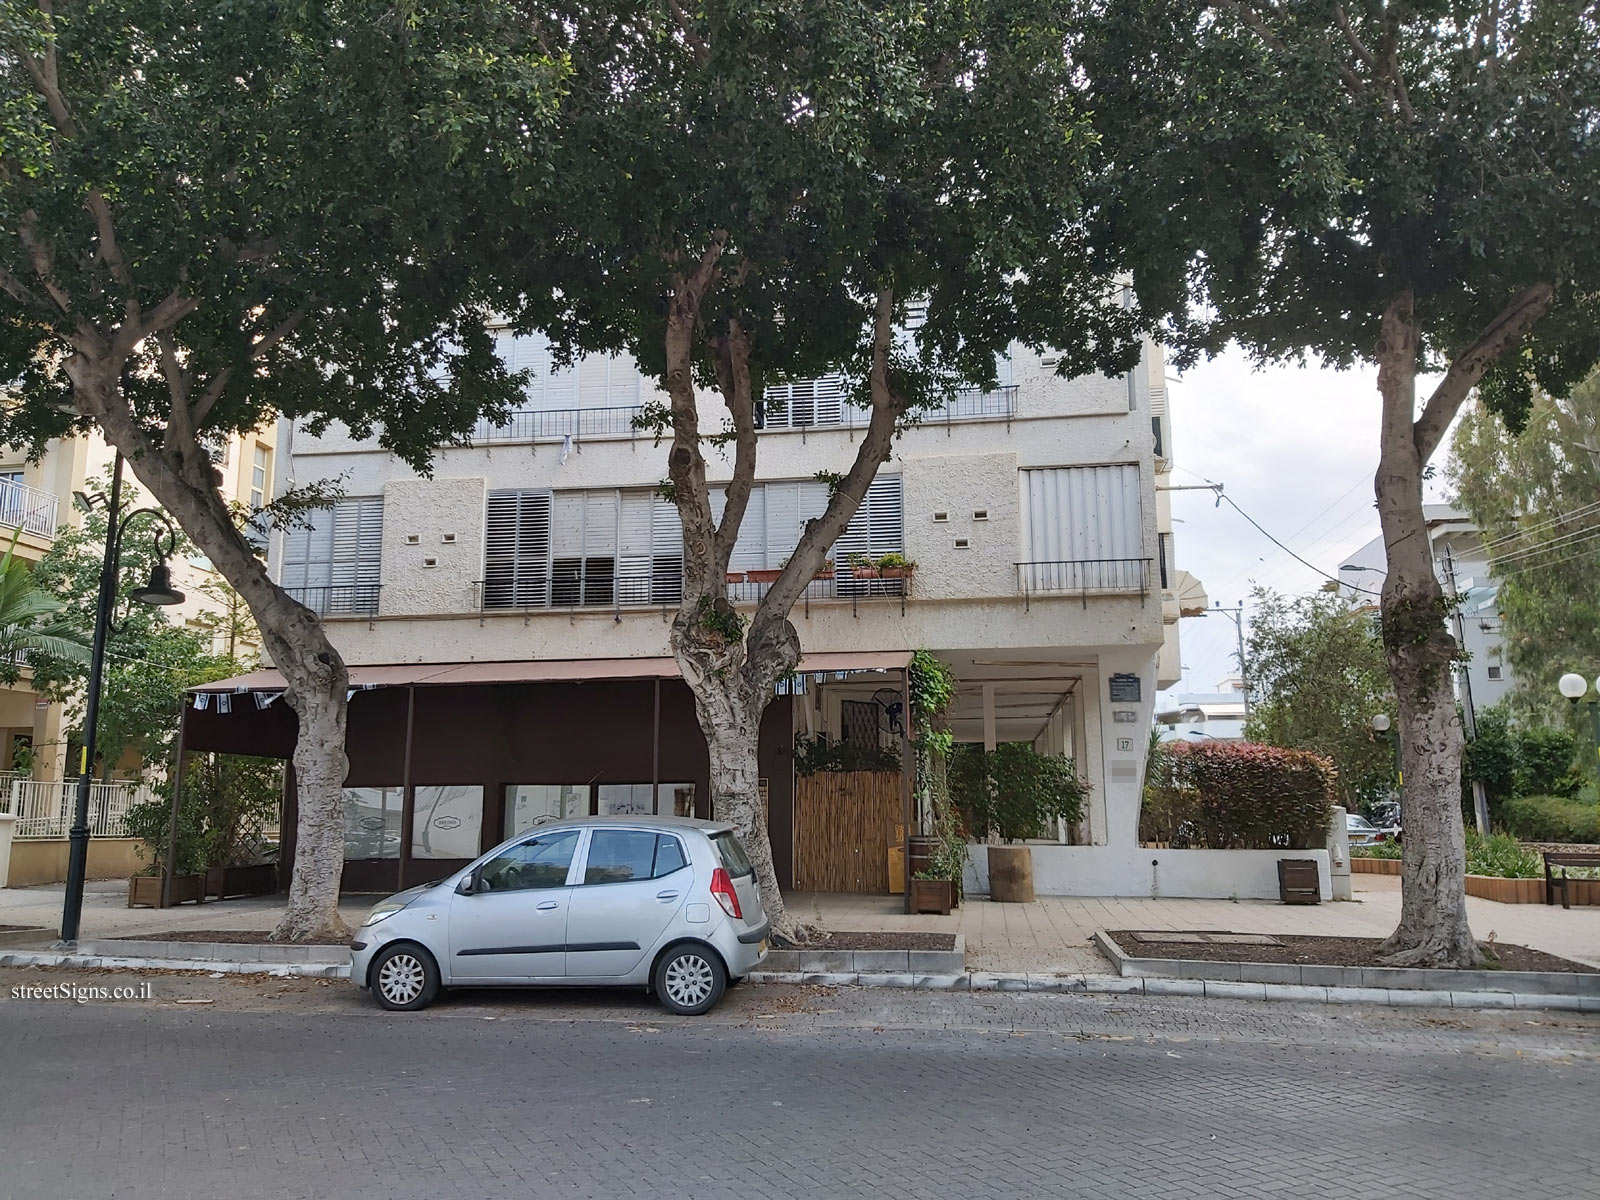 Heritage Sites in Israel - Haskelberg House - Ya’akov St 17, Rehovot, Israel